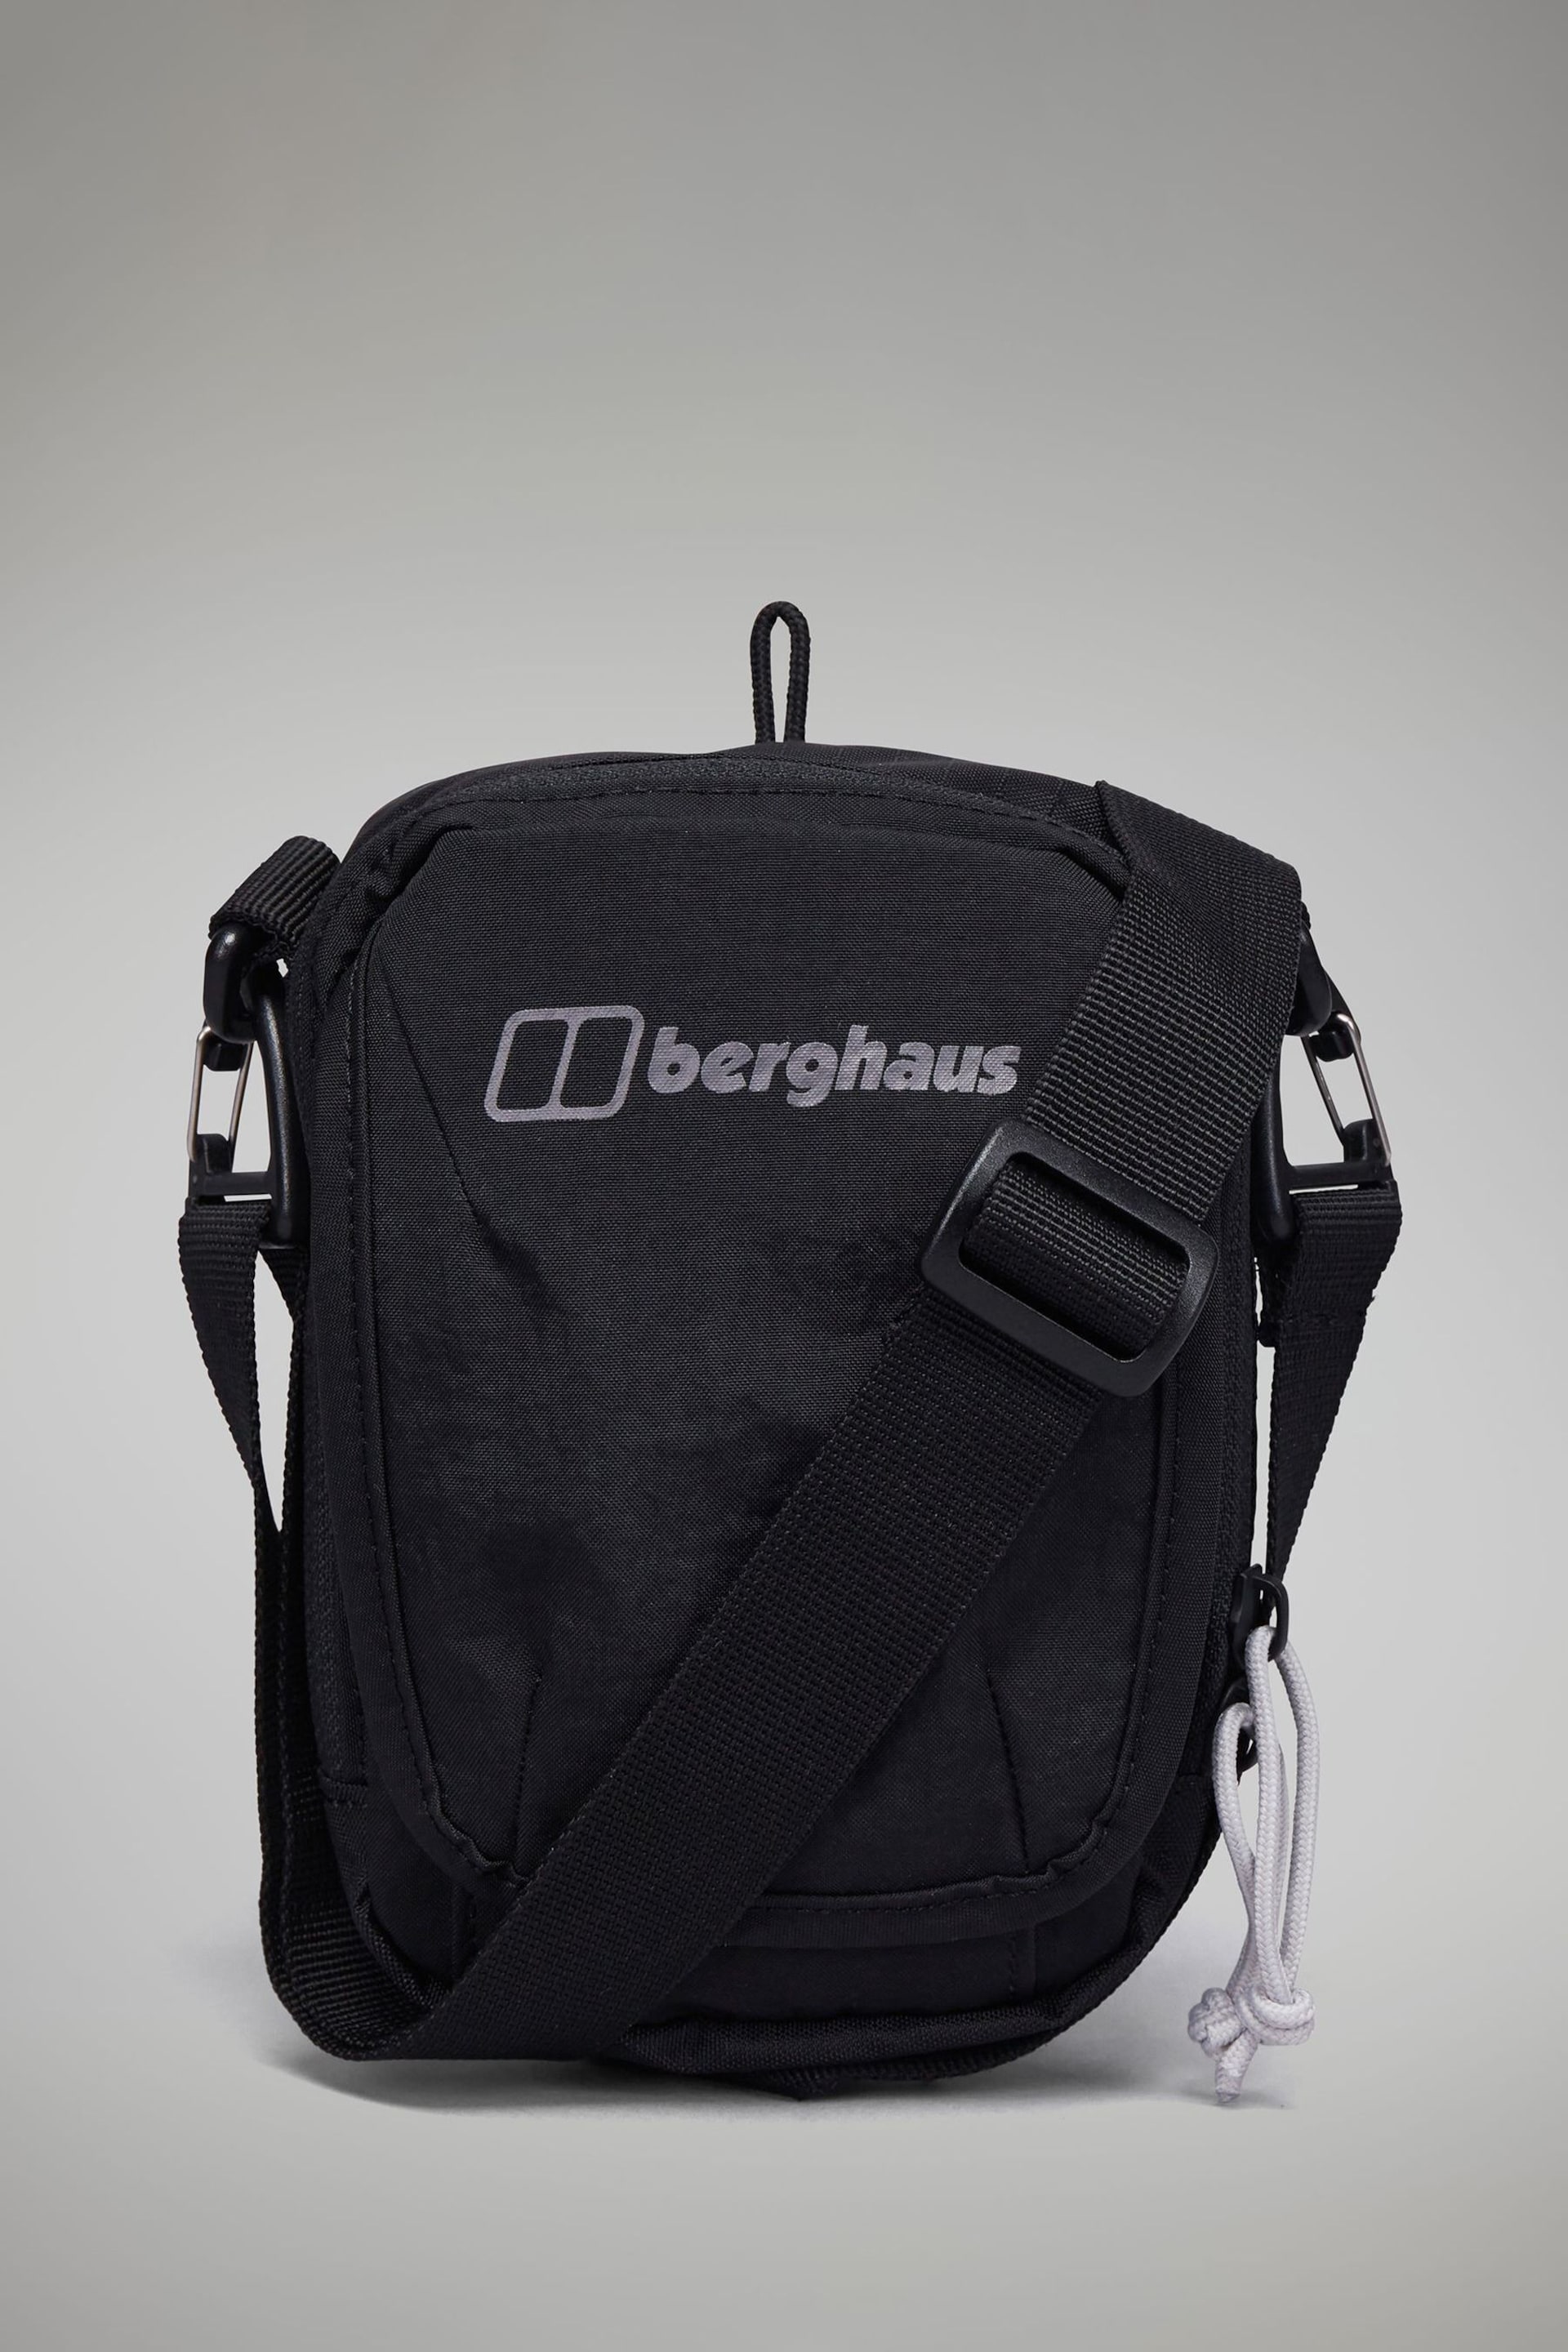 Berghaus Small Xodus X-Body Bag - Image 4 of 5